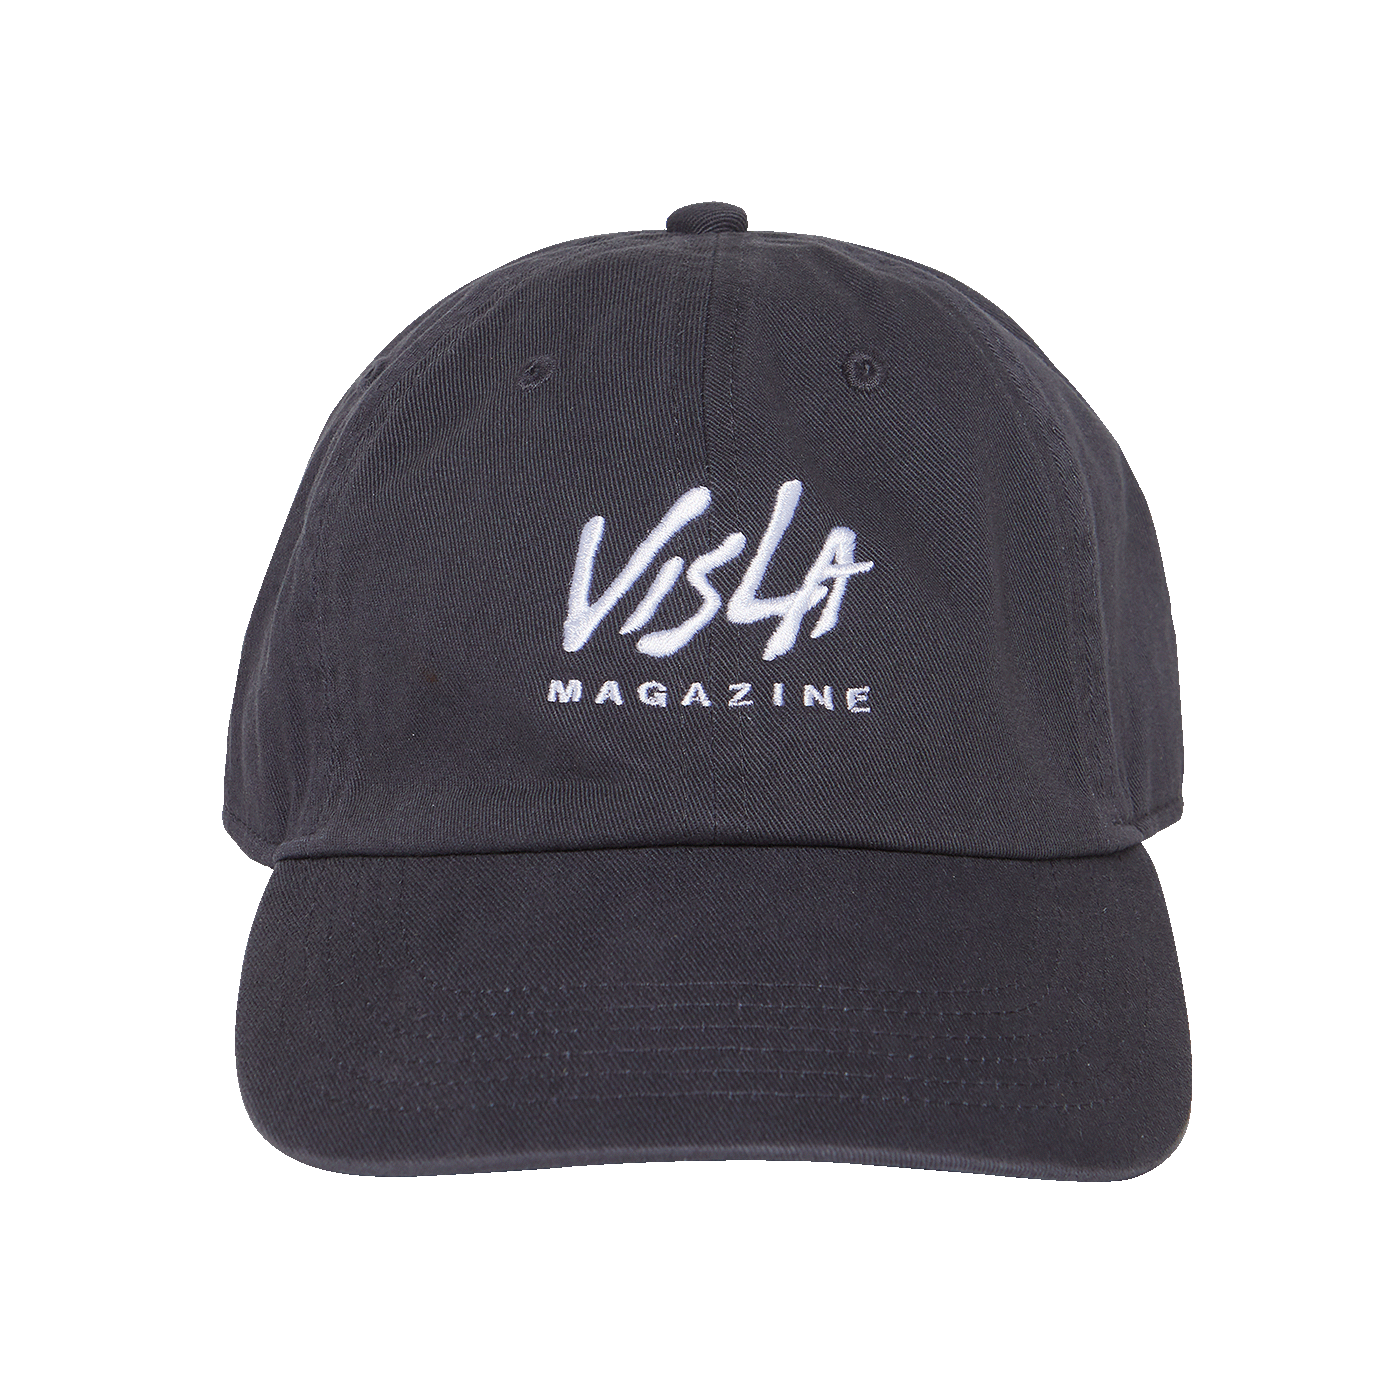 VISLA Magazine Logo Ball Cap – Charcoal